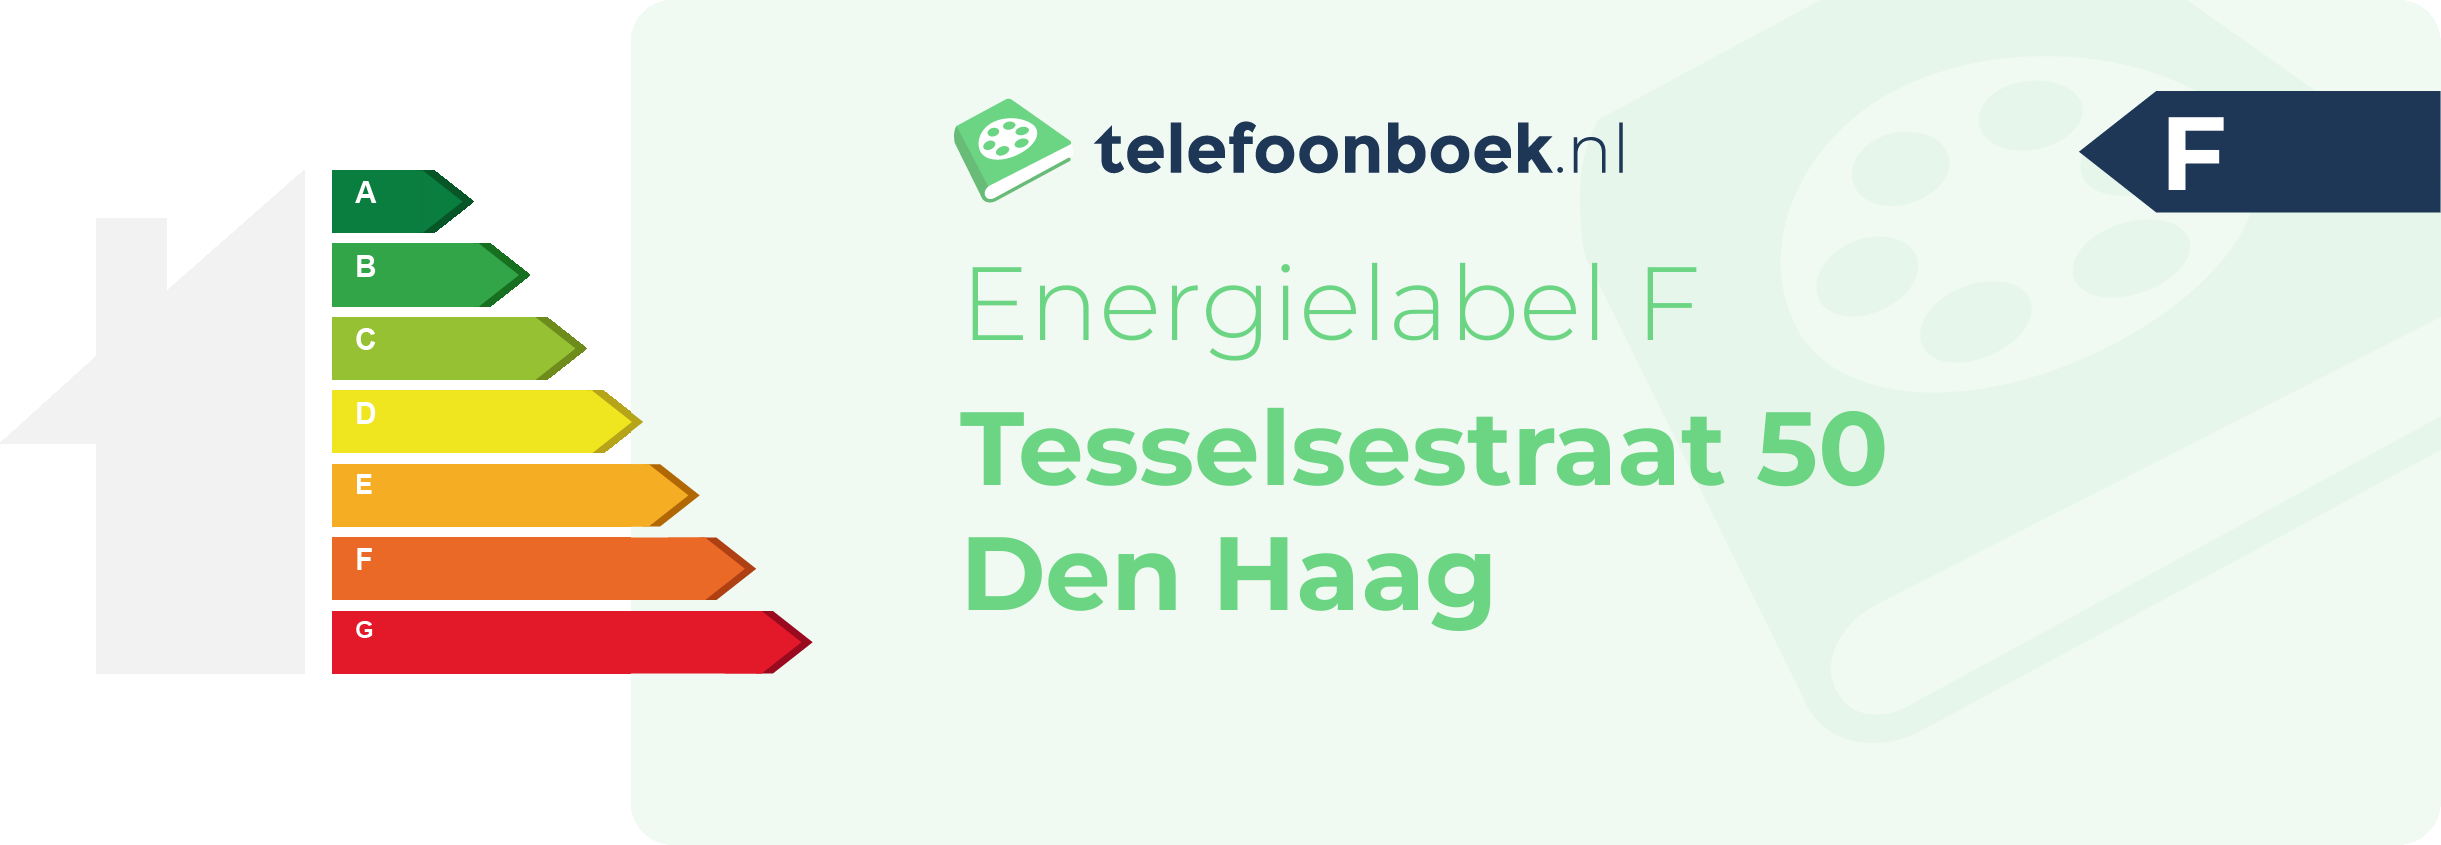 Energielabel Tesselsestraat 50 Den Haag